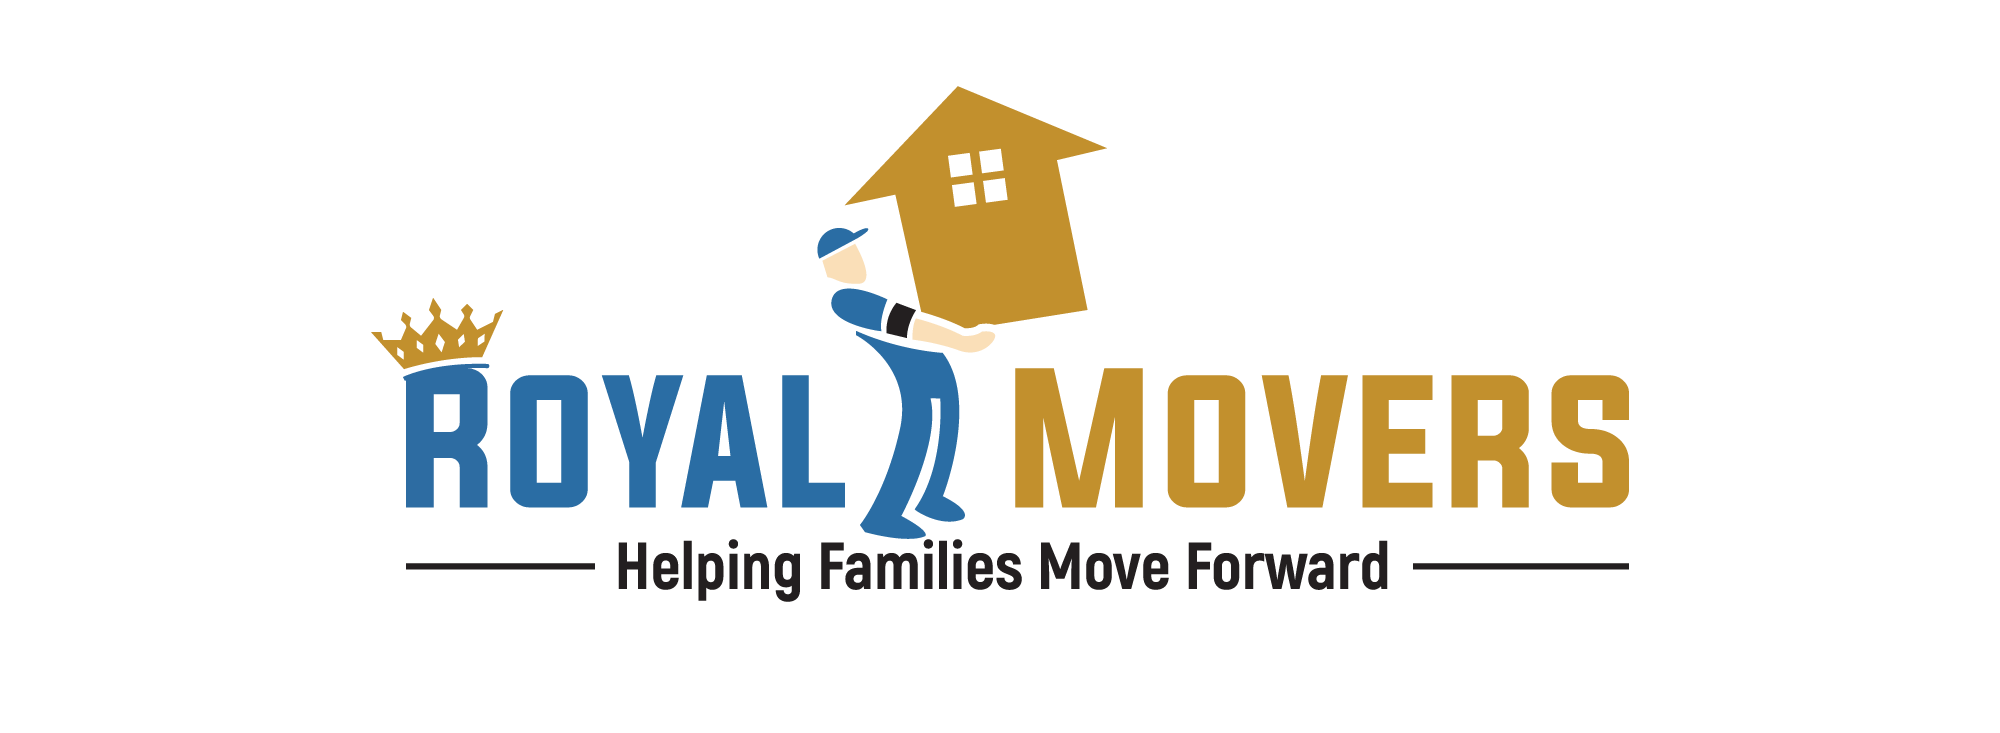 Royal Movers logo